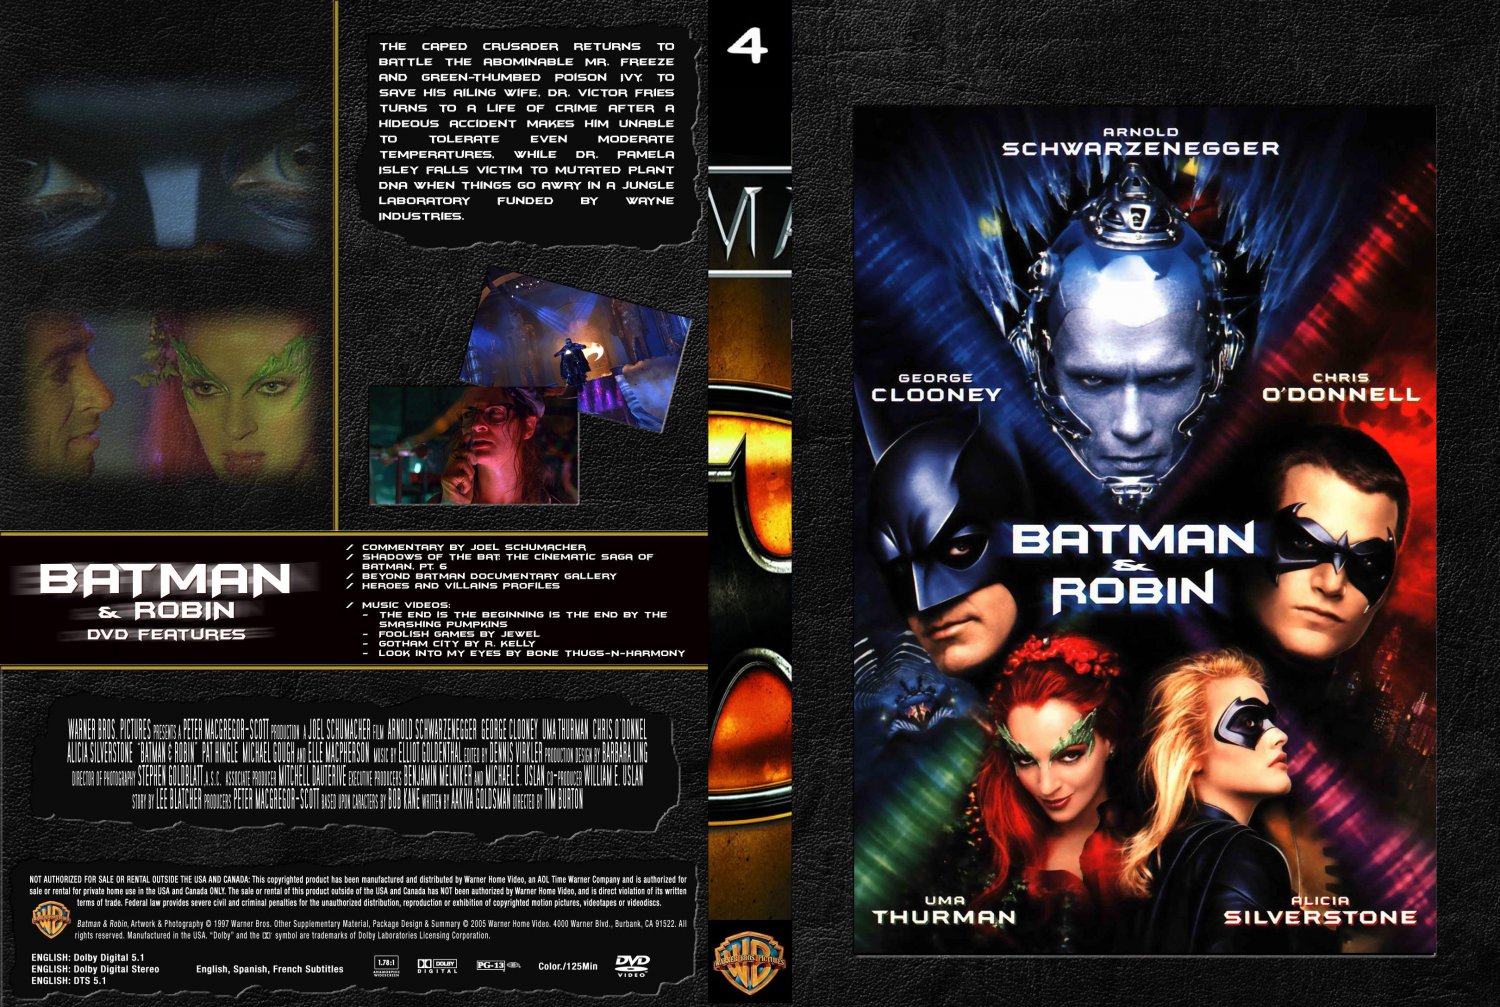 Batman And Robin DVD Cover